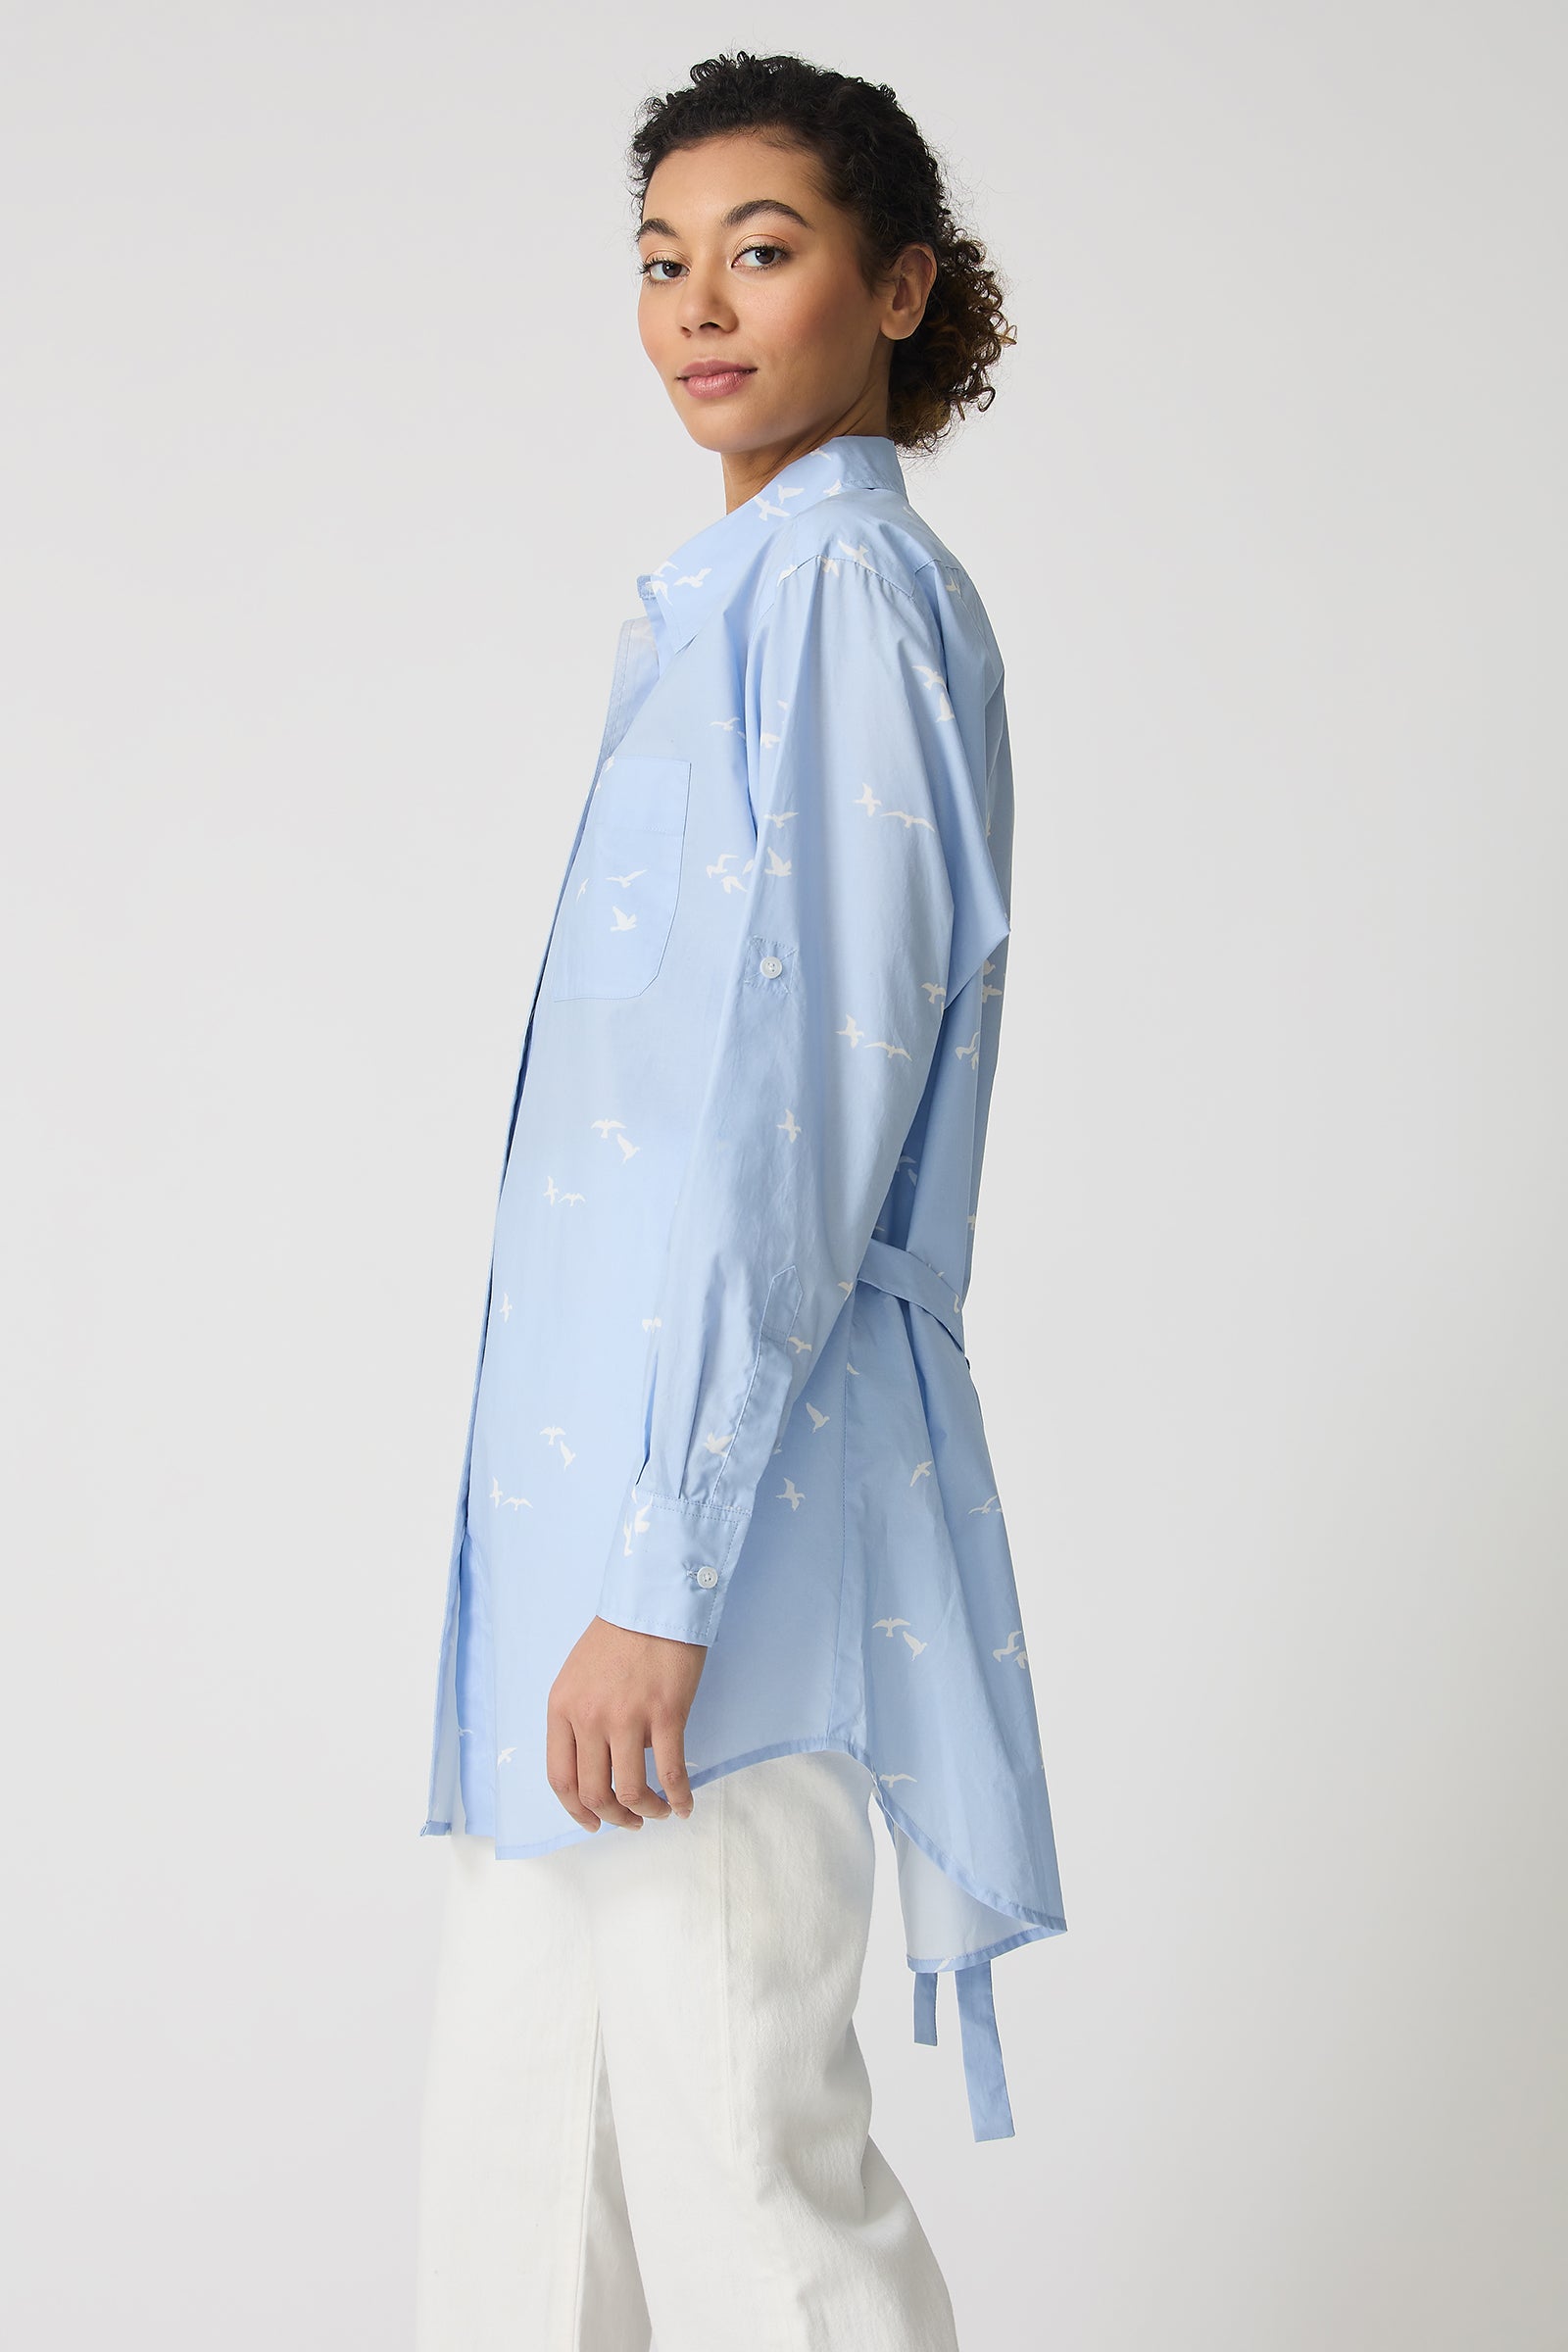 Kal Rieman Deanna Shirt in Oxford Blue Bird Print on model side view